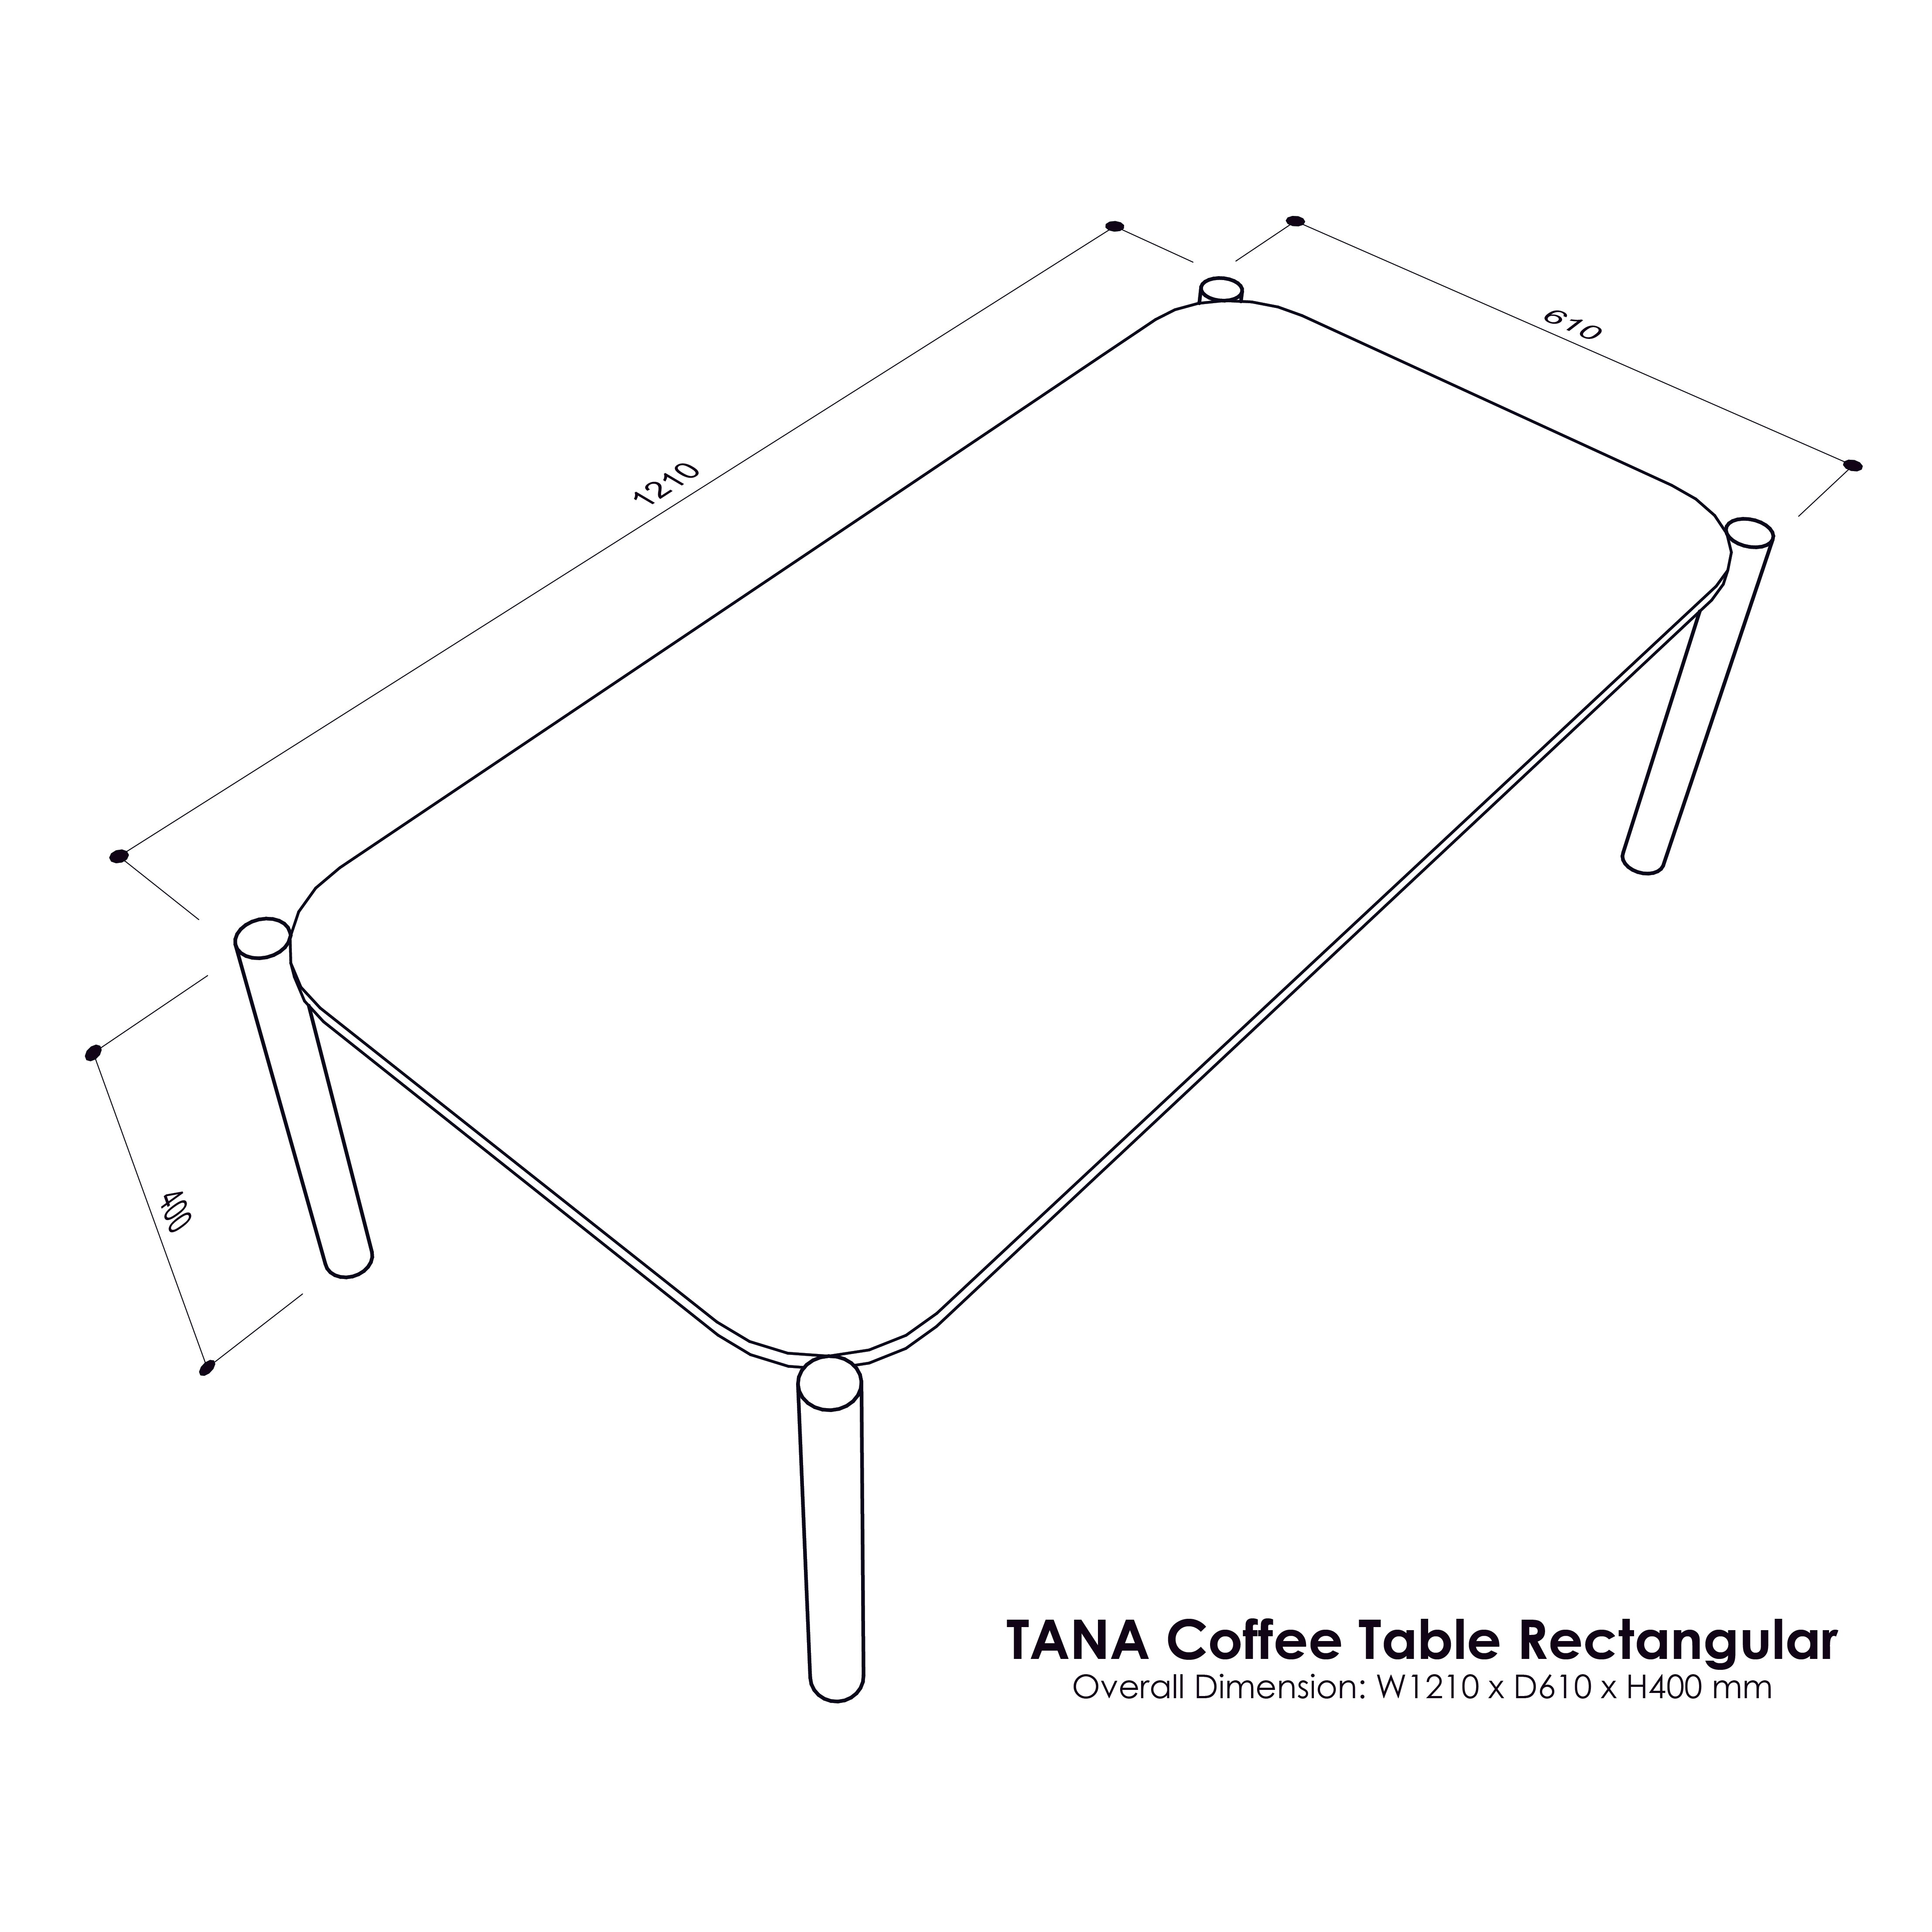 TANA Coffee Table Rectangular